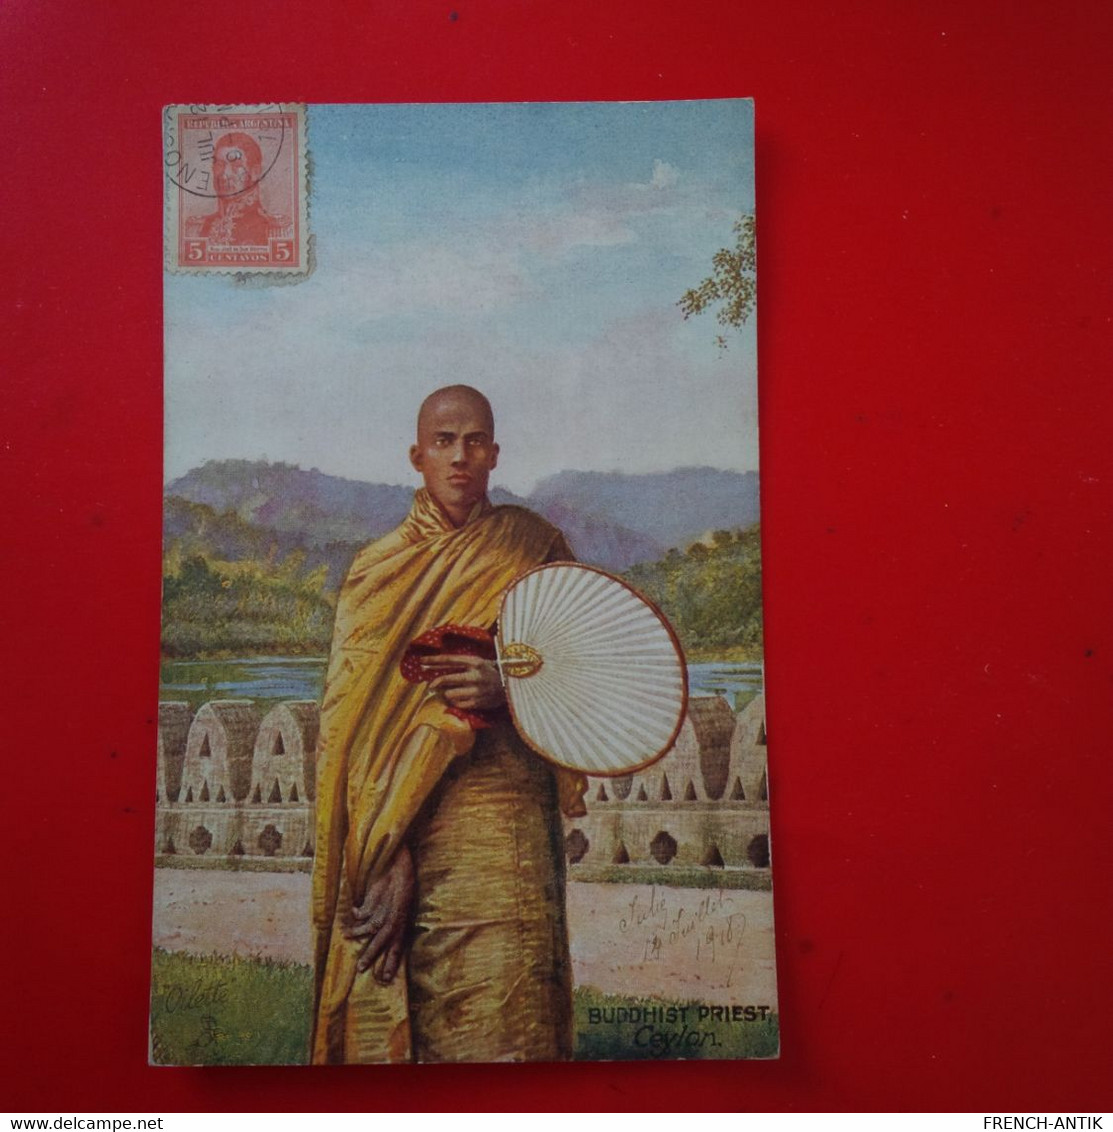 BUDDHIST PRIEST CEYLON - Sri Lanka (Ceylon)